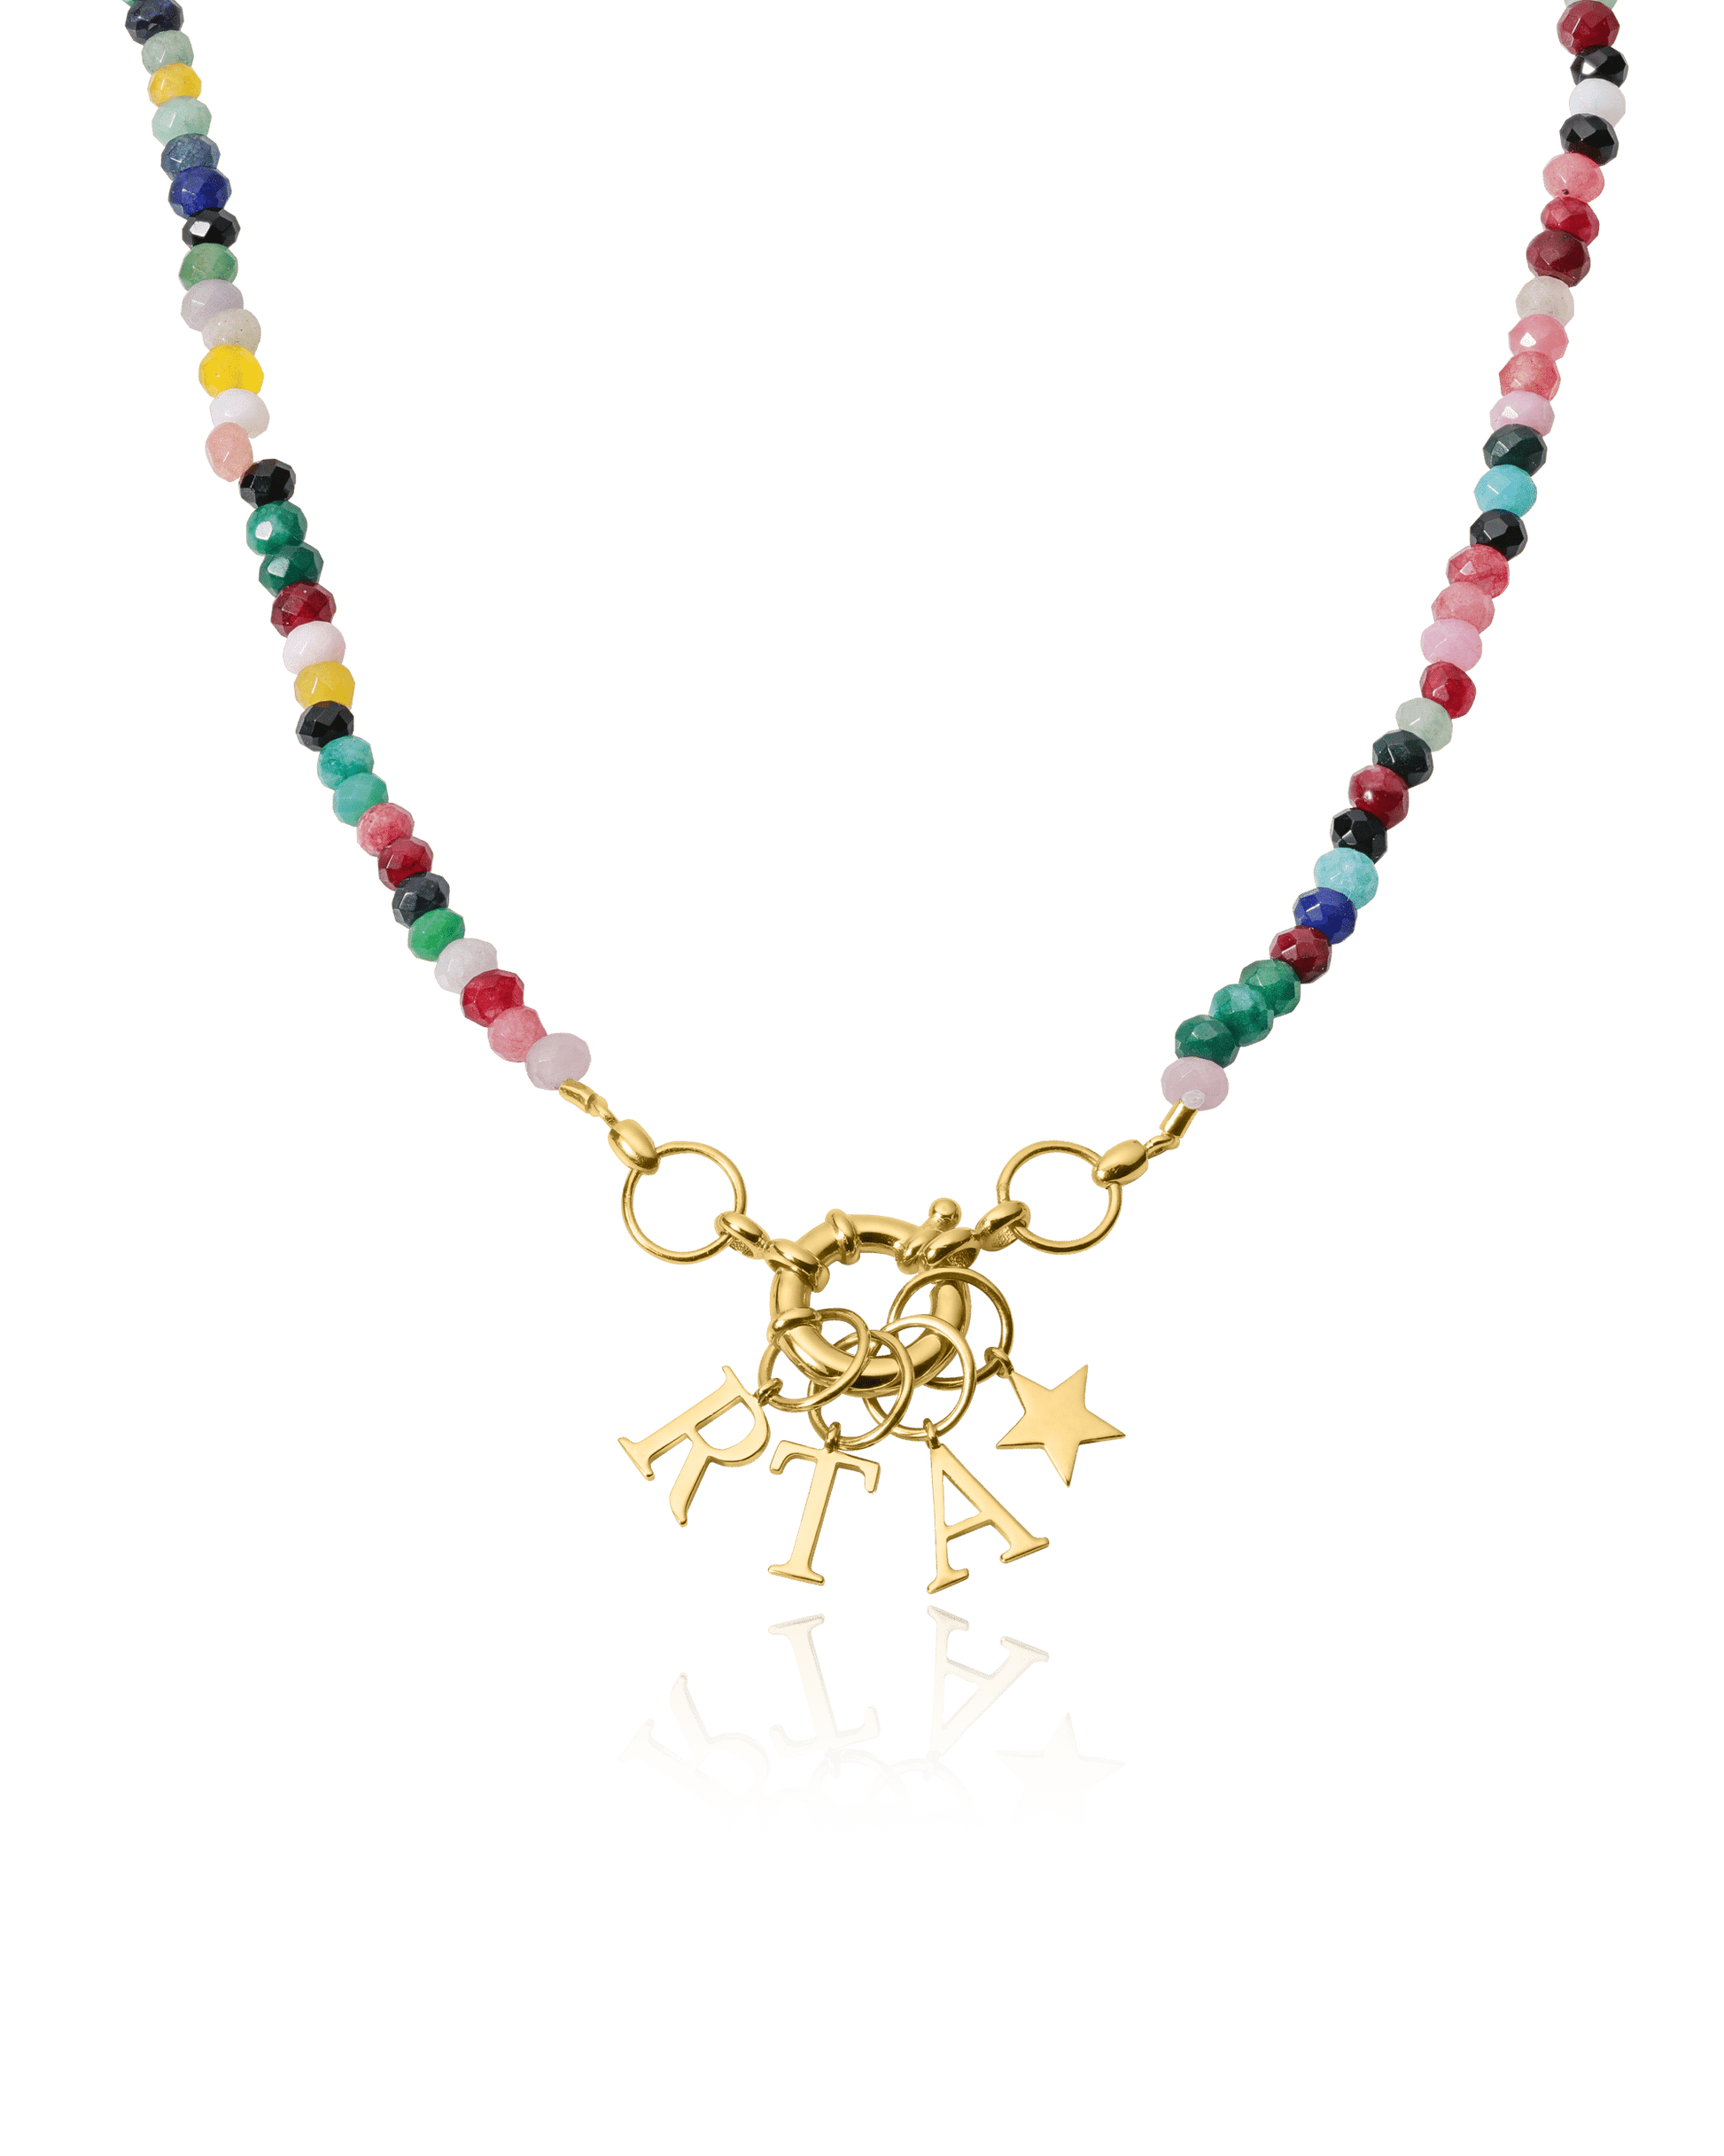 Watermelon Charm Lock Necklace - 18K Gold Vermeil Necklaces magal-dev Colorful Jade Gemstones 1 Charm 16"